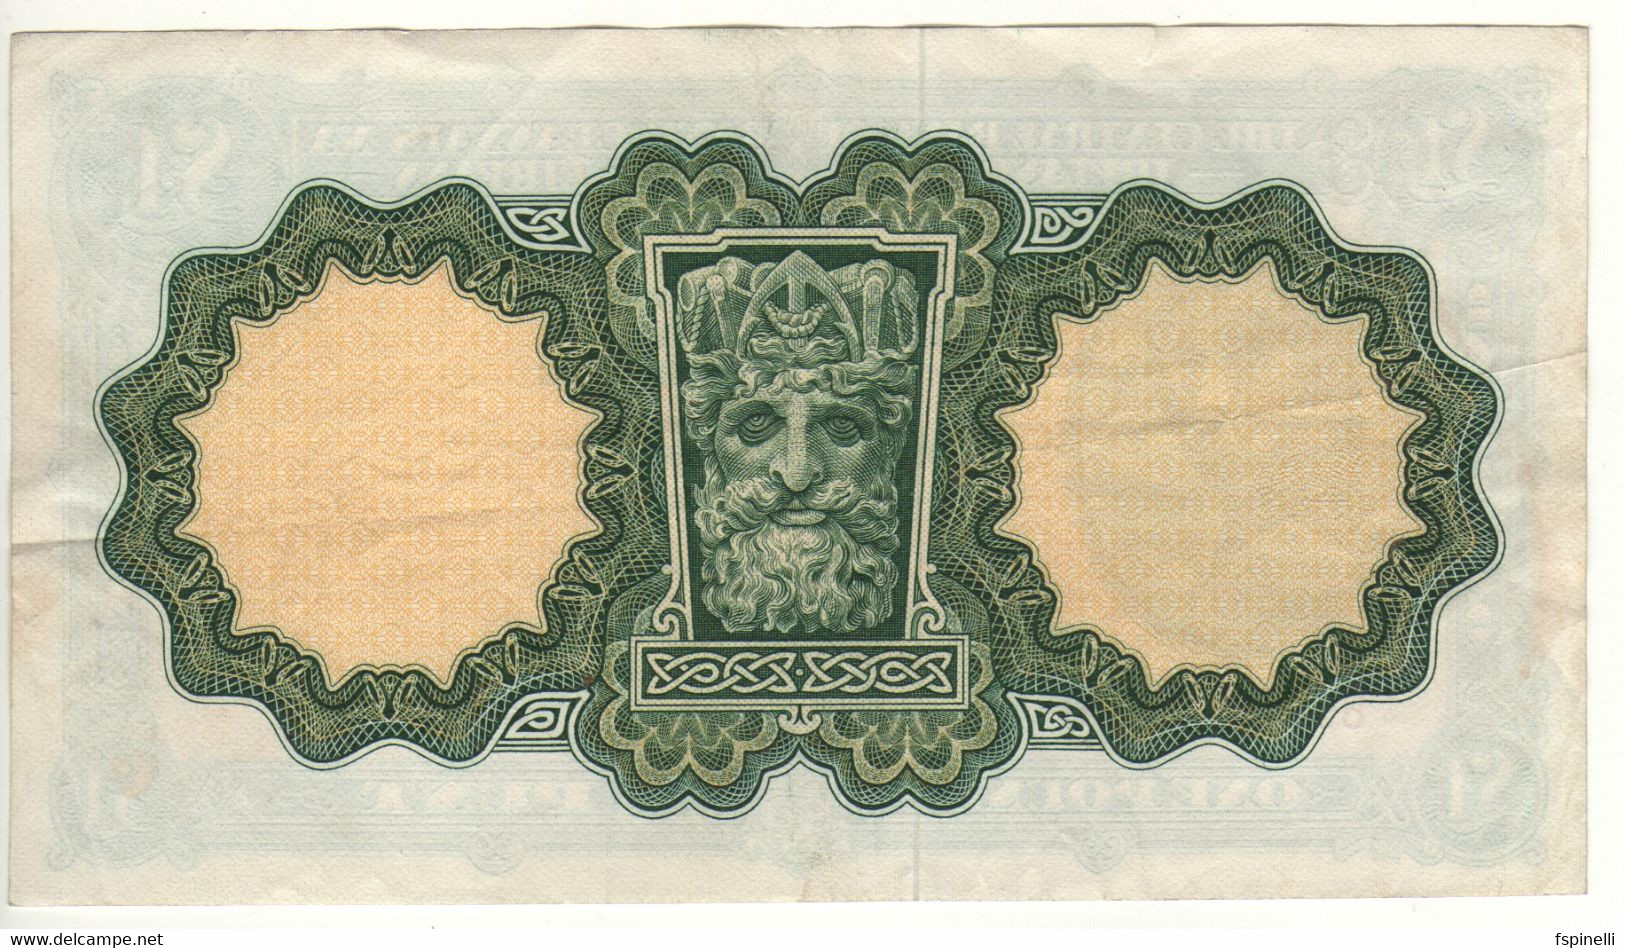 IRELAND  1 Pound  P64c  Dated 28.6.72   (Lady Lavery -    Sign.   Whitaker & Murray ) - Irlanda